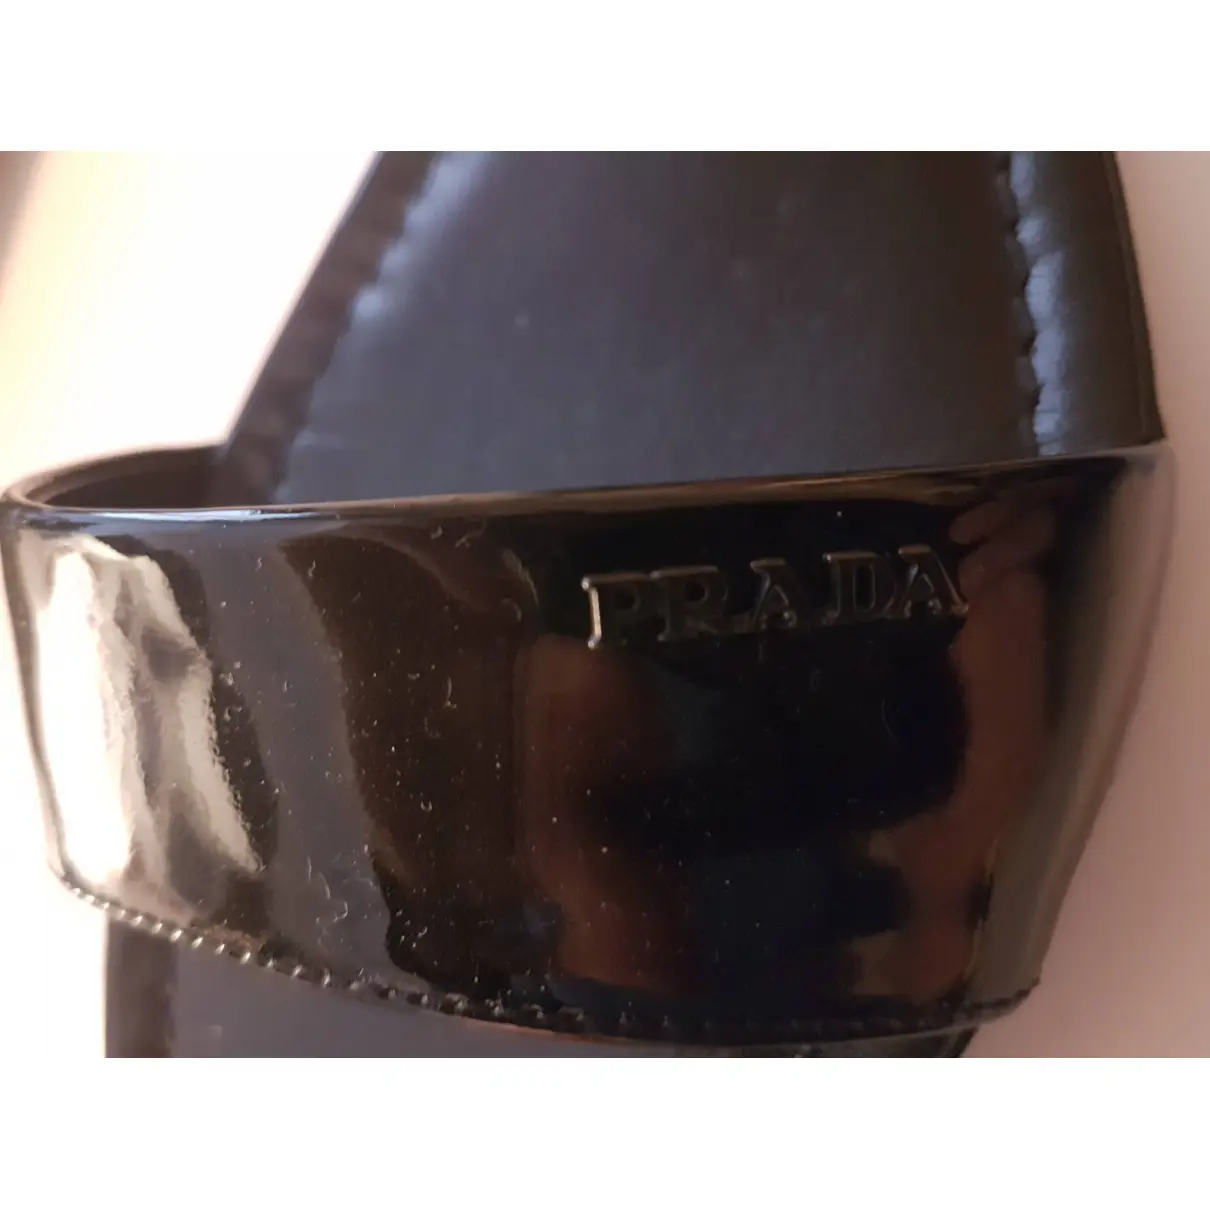 Patent leather flip flops Prada